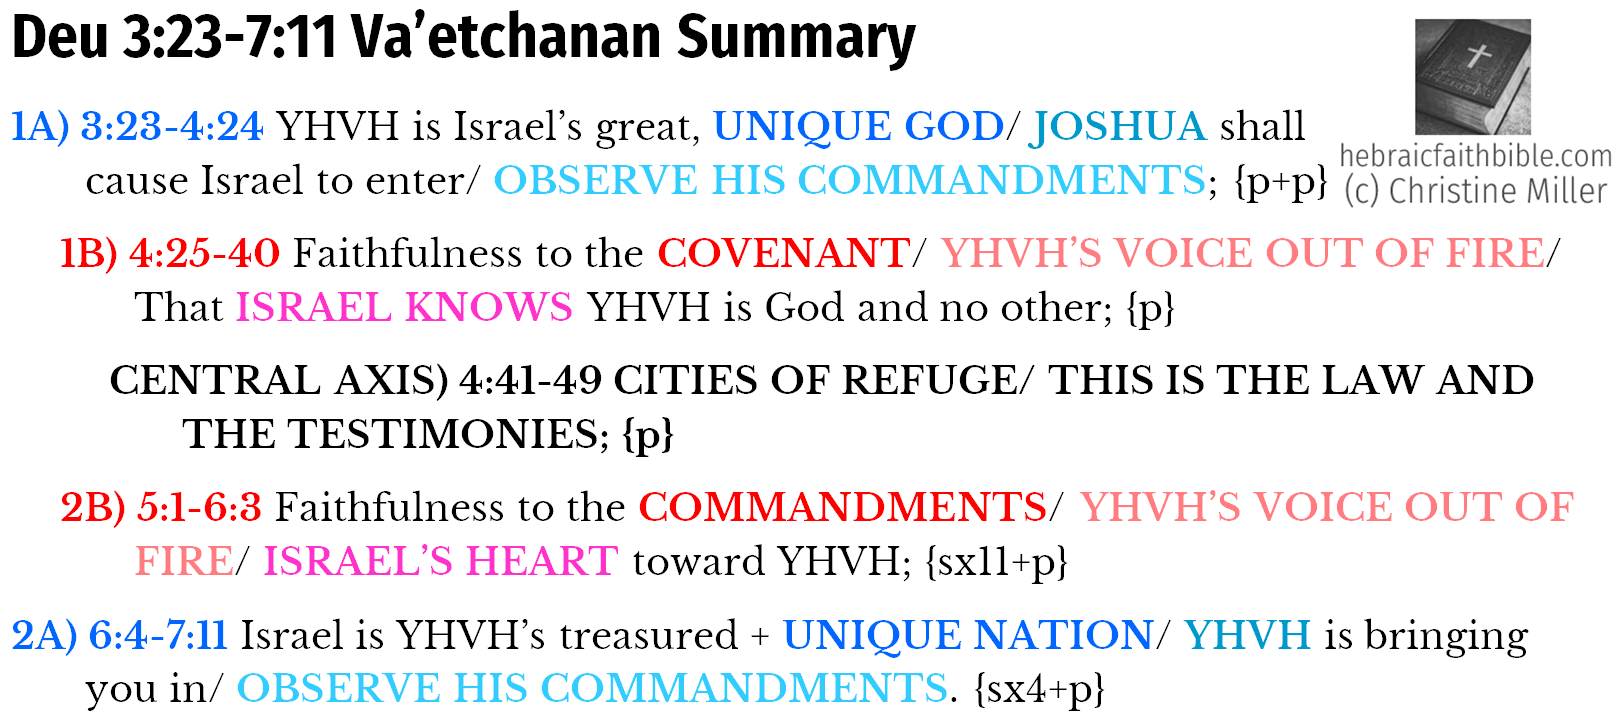 Deu 3:23-7:11 Va'etchanan Summary | hebraicfaithbible.com